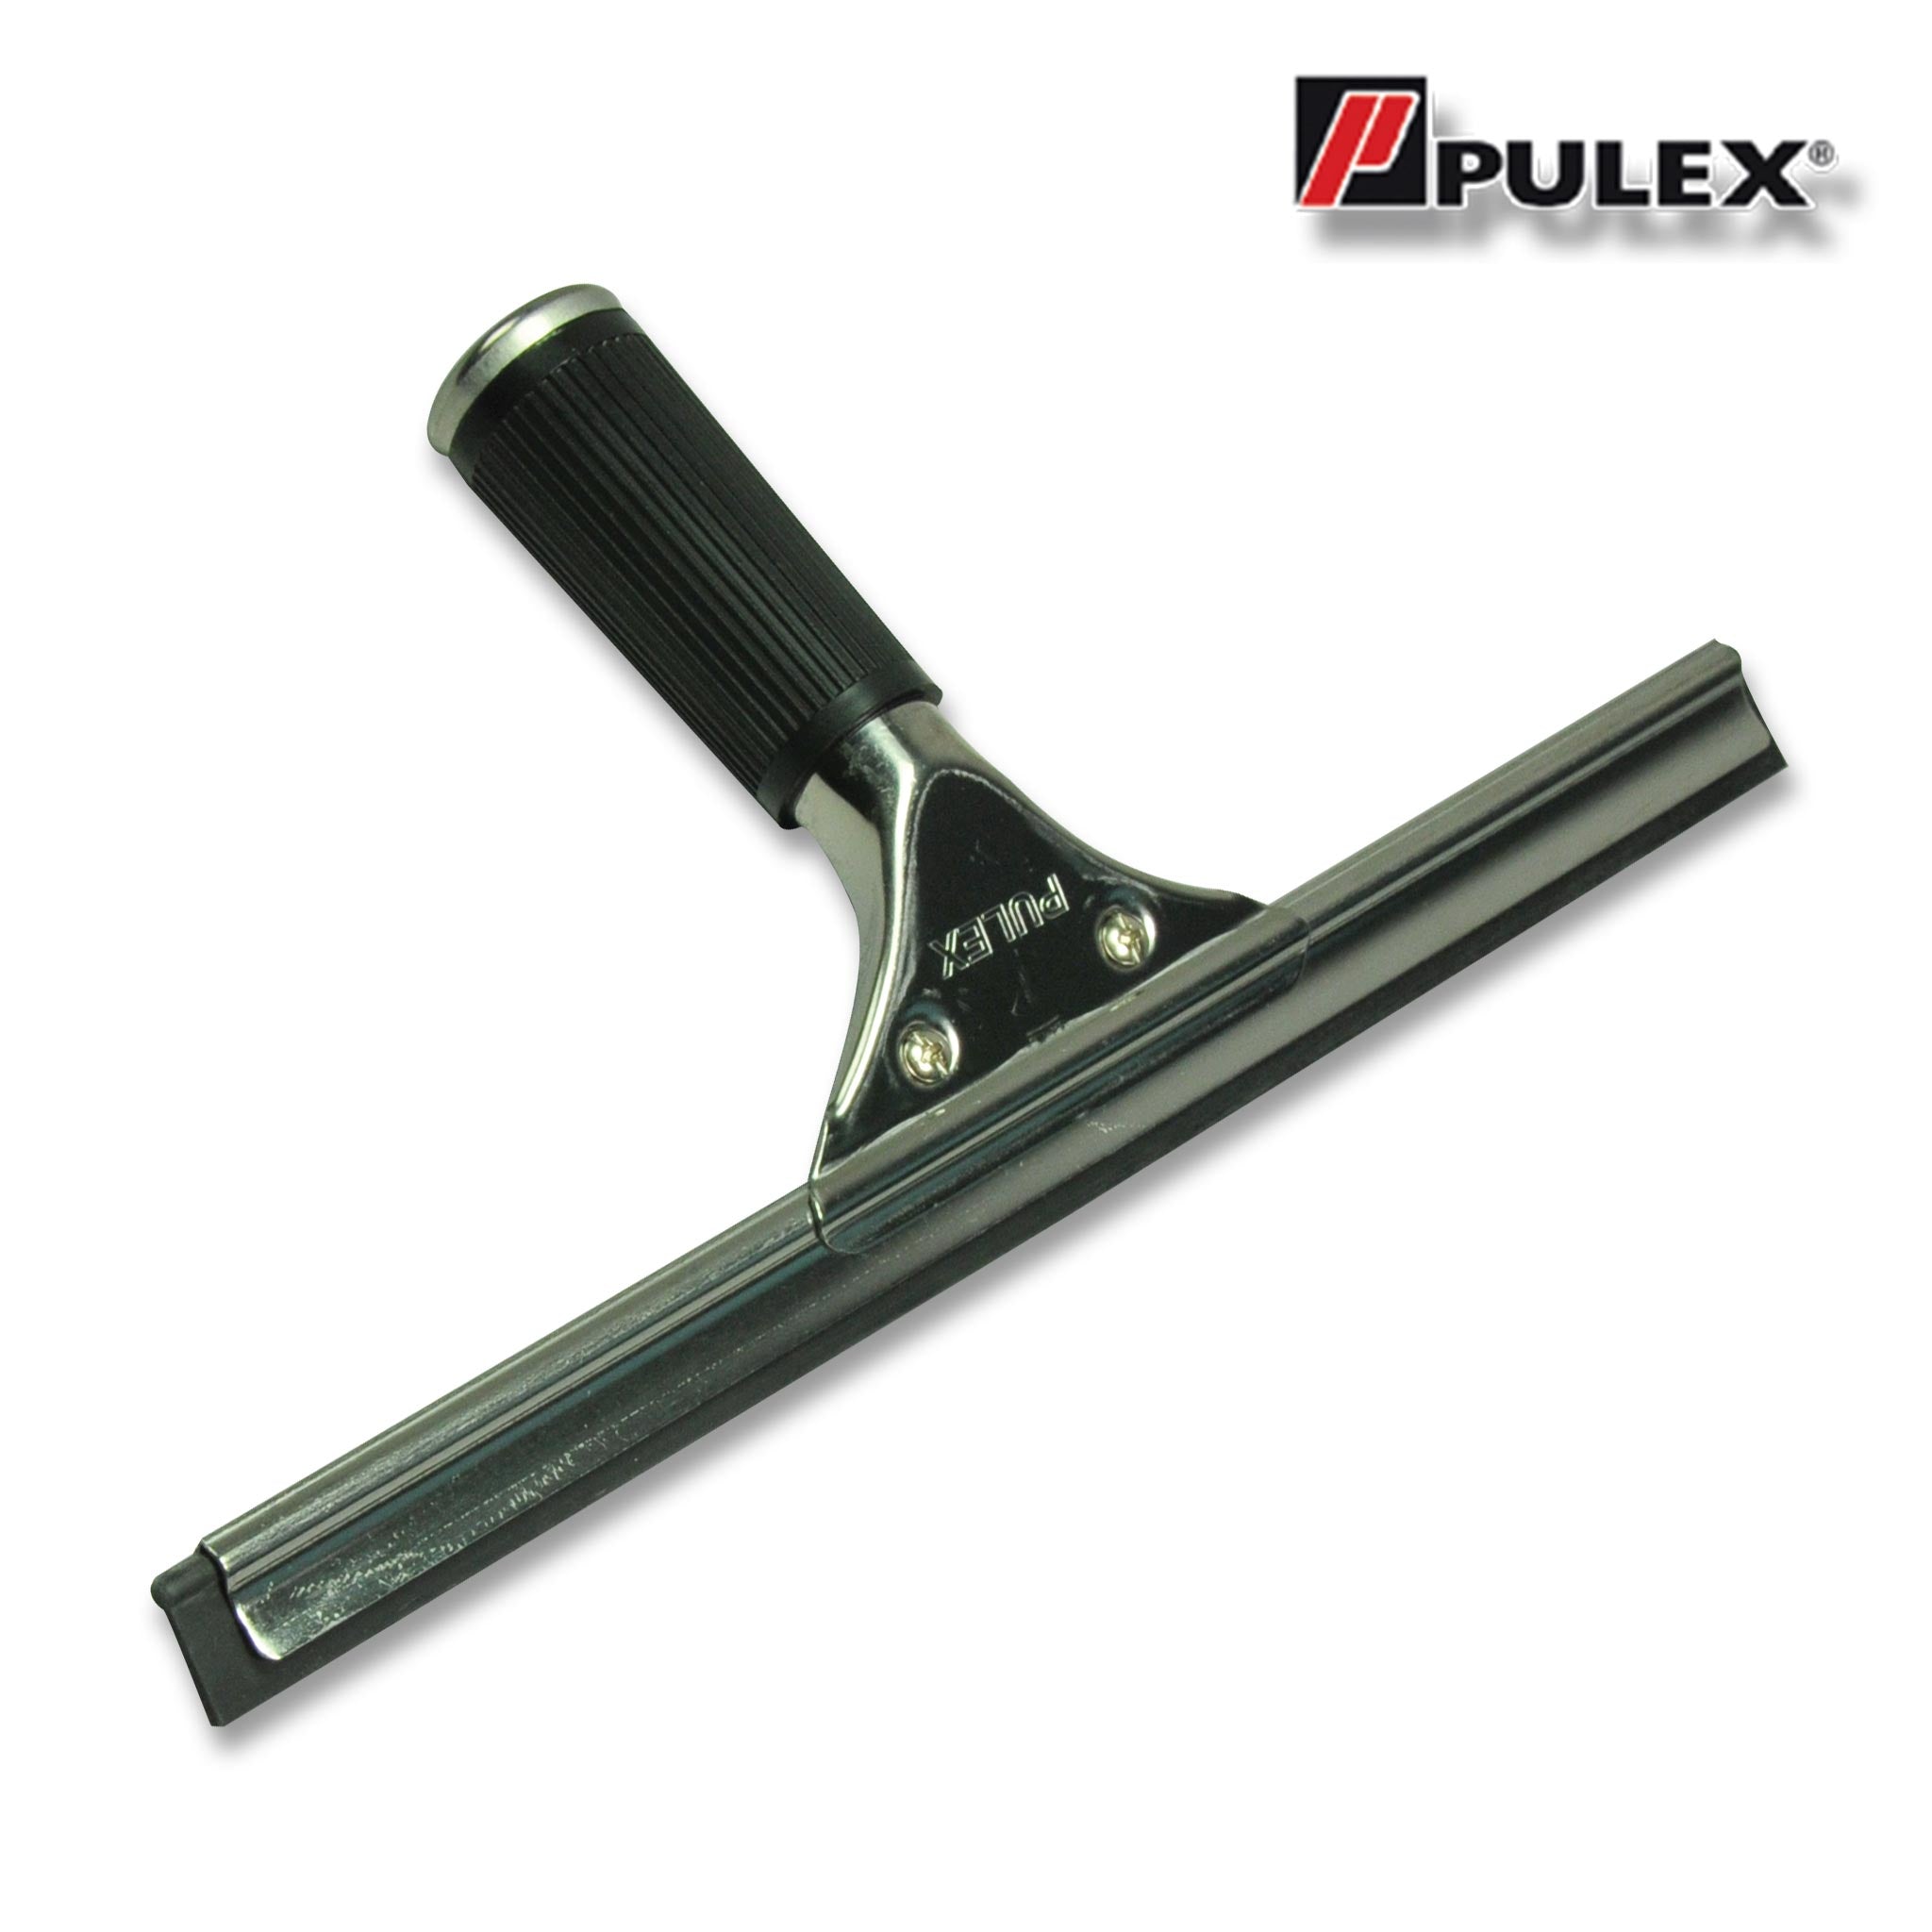 Pulex Inox (Stainless Steel) Window Squeegee